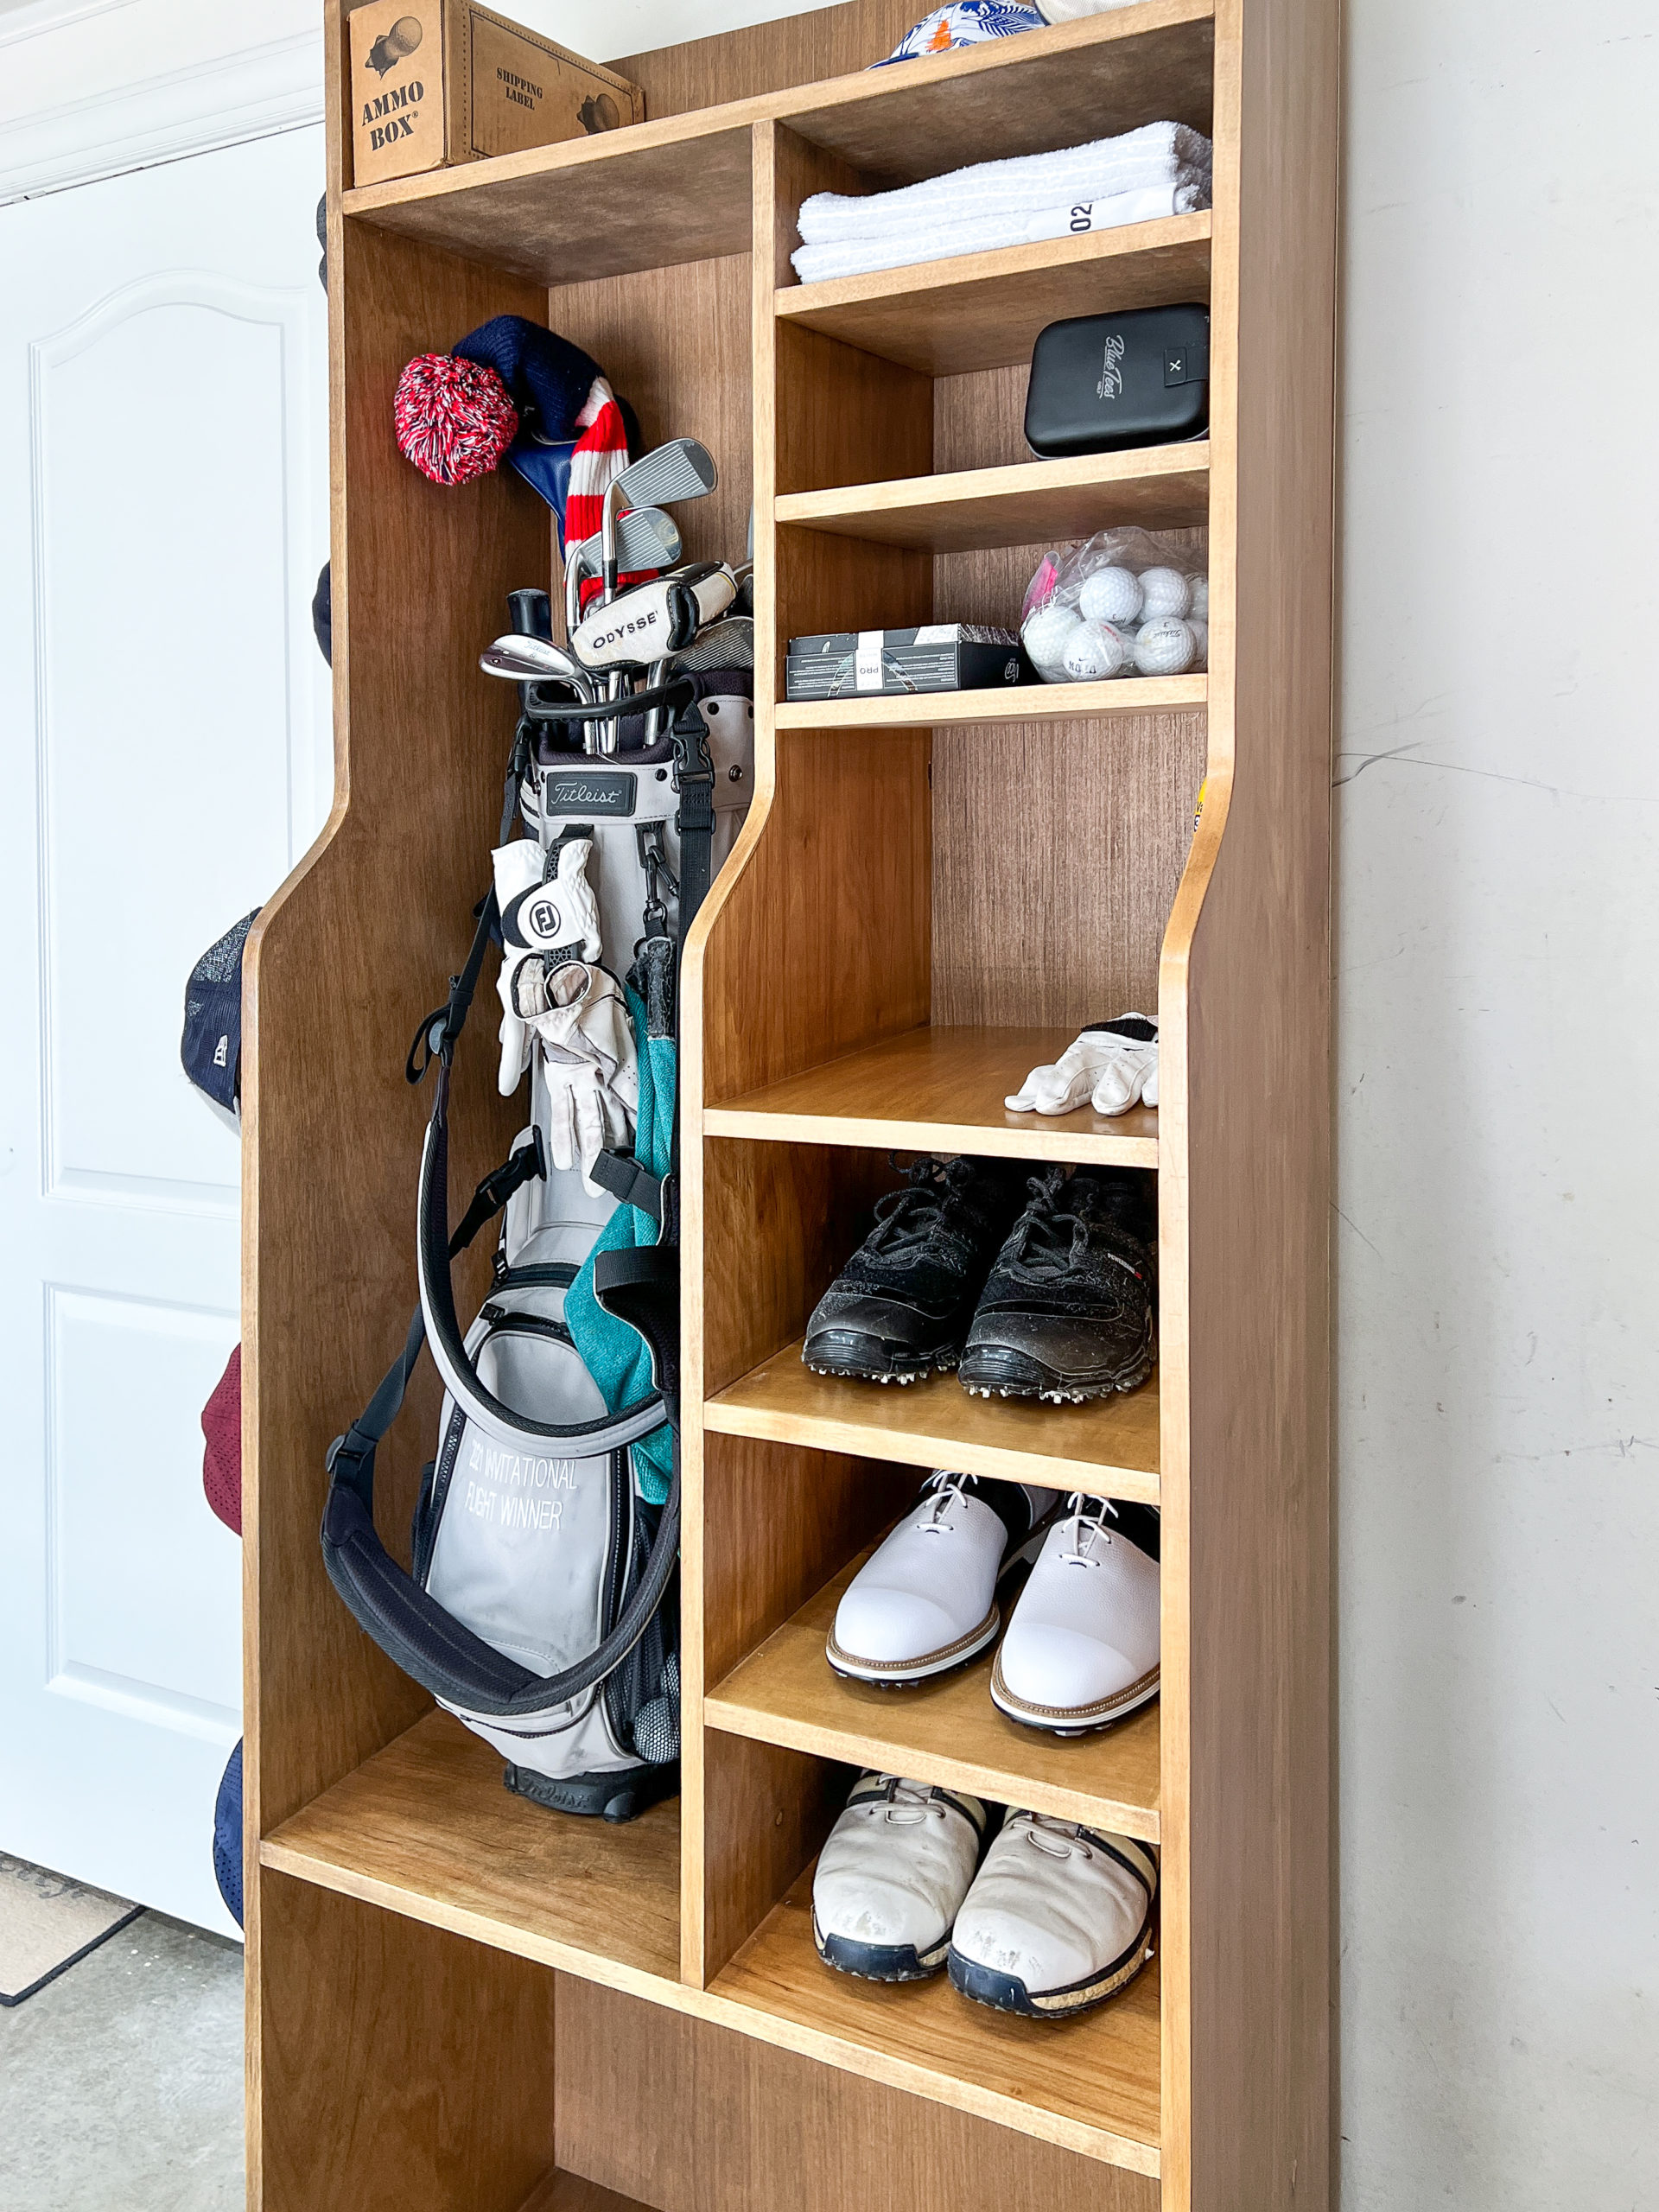 Simple Golf Storage Design Plans 